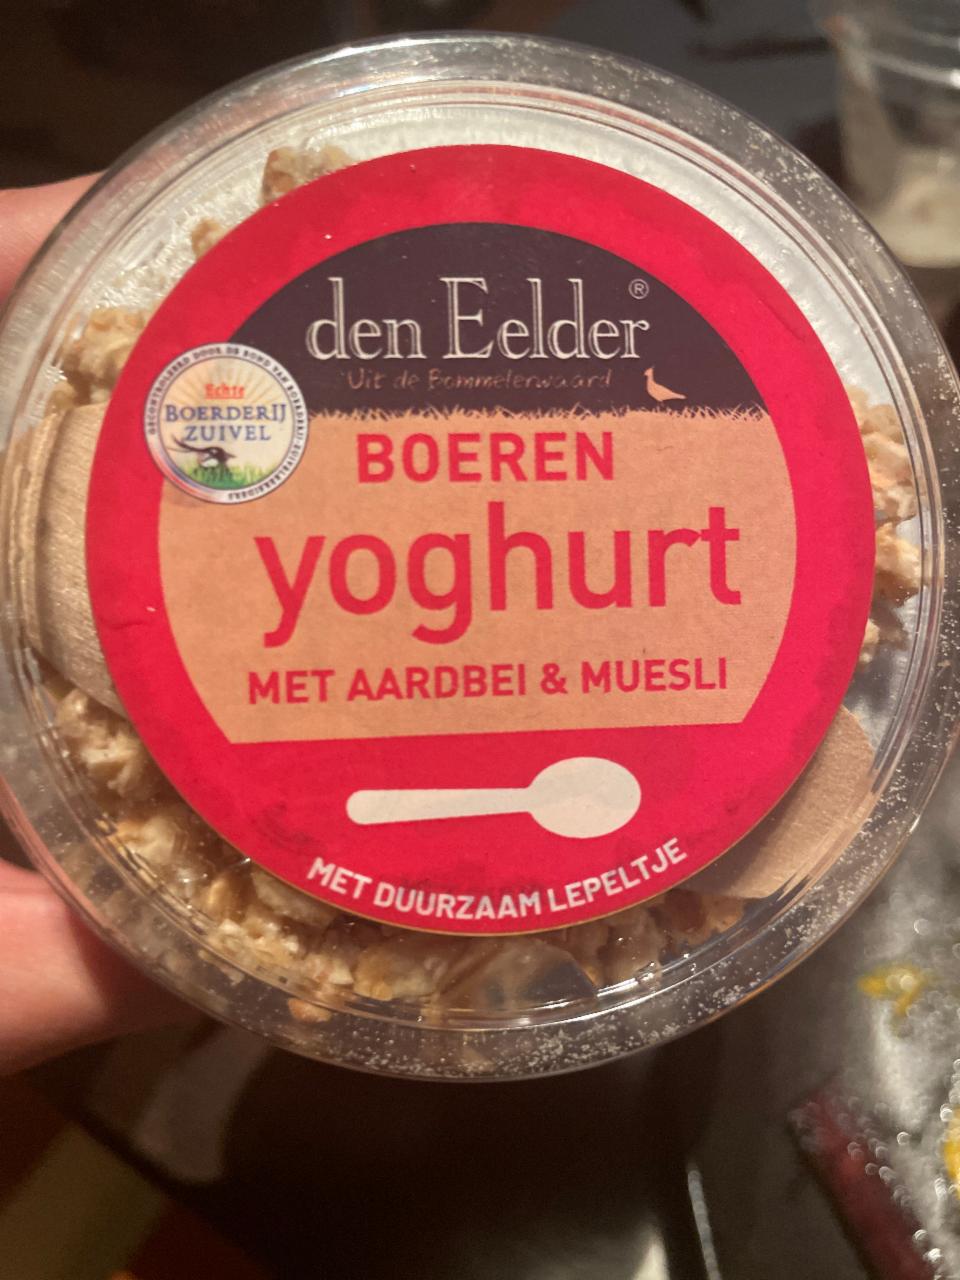 Фото - йогурт с мюсли den Eelder